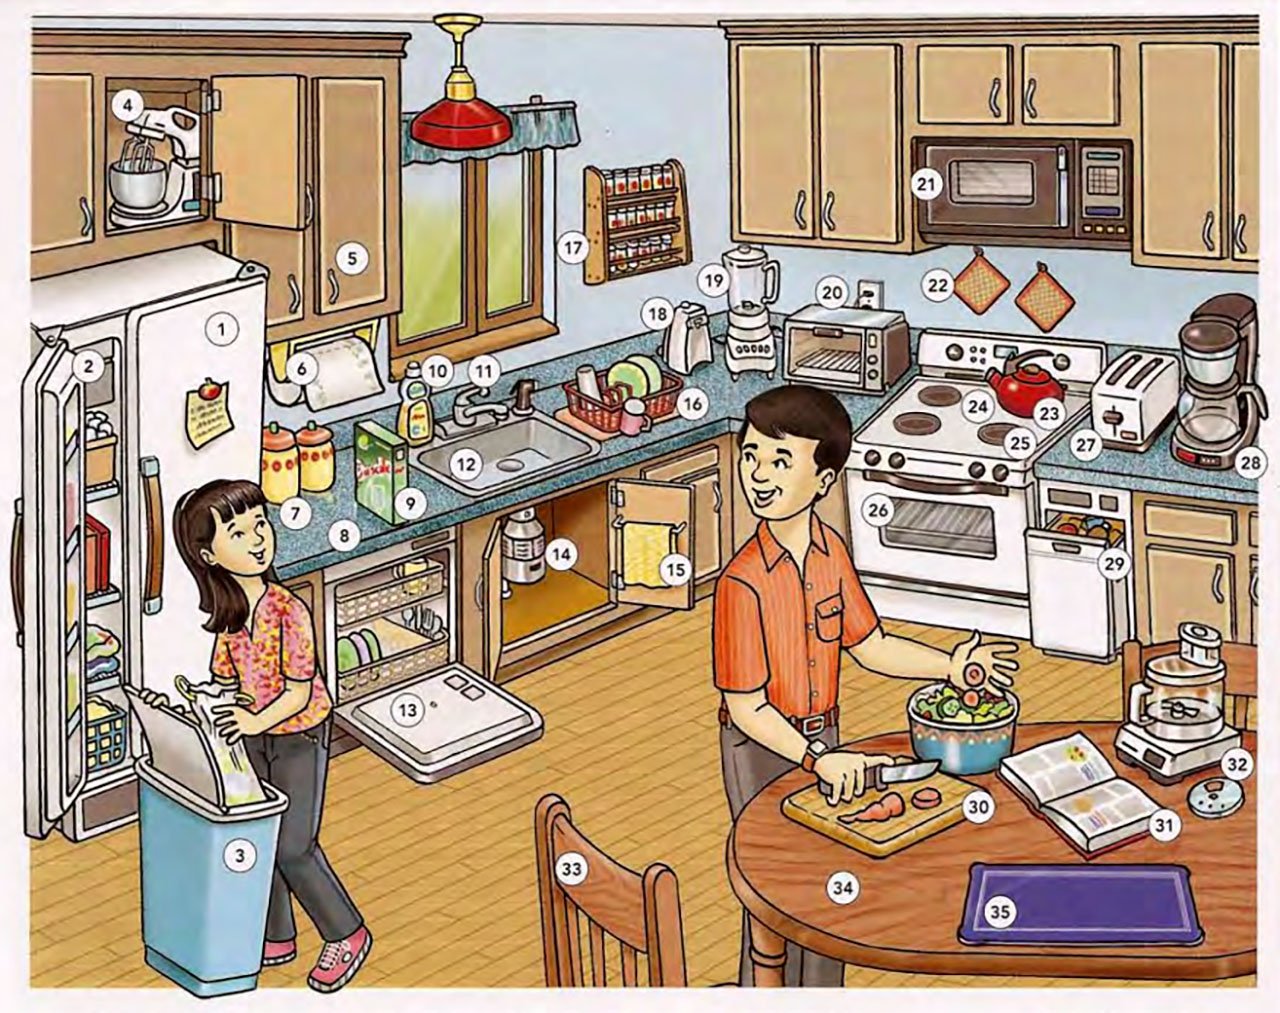 They a new flat. Кухня иллюстрация. Картинки для описания. Кухня рисунок. Предметы кухни рисунок.